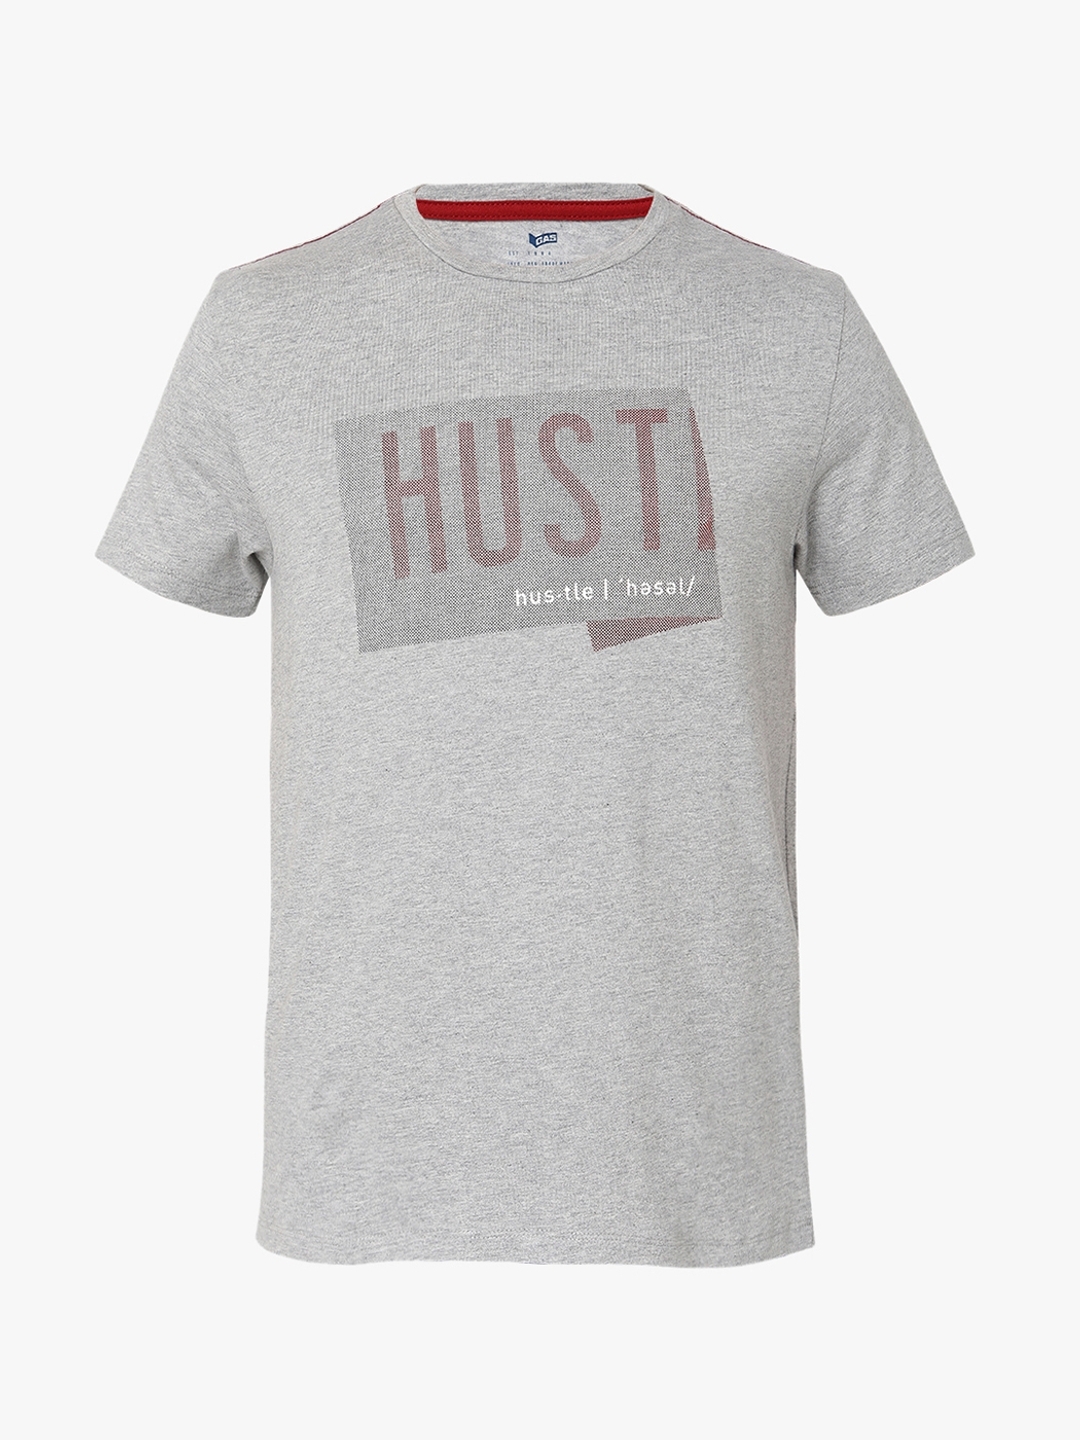 Scuba Hustle Crew-Neck T-shirt